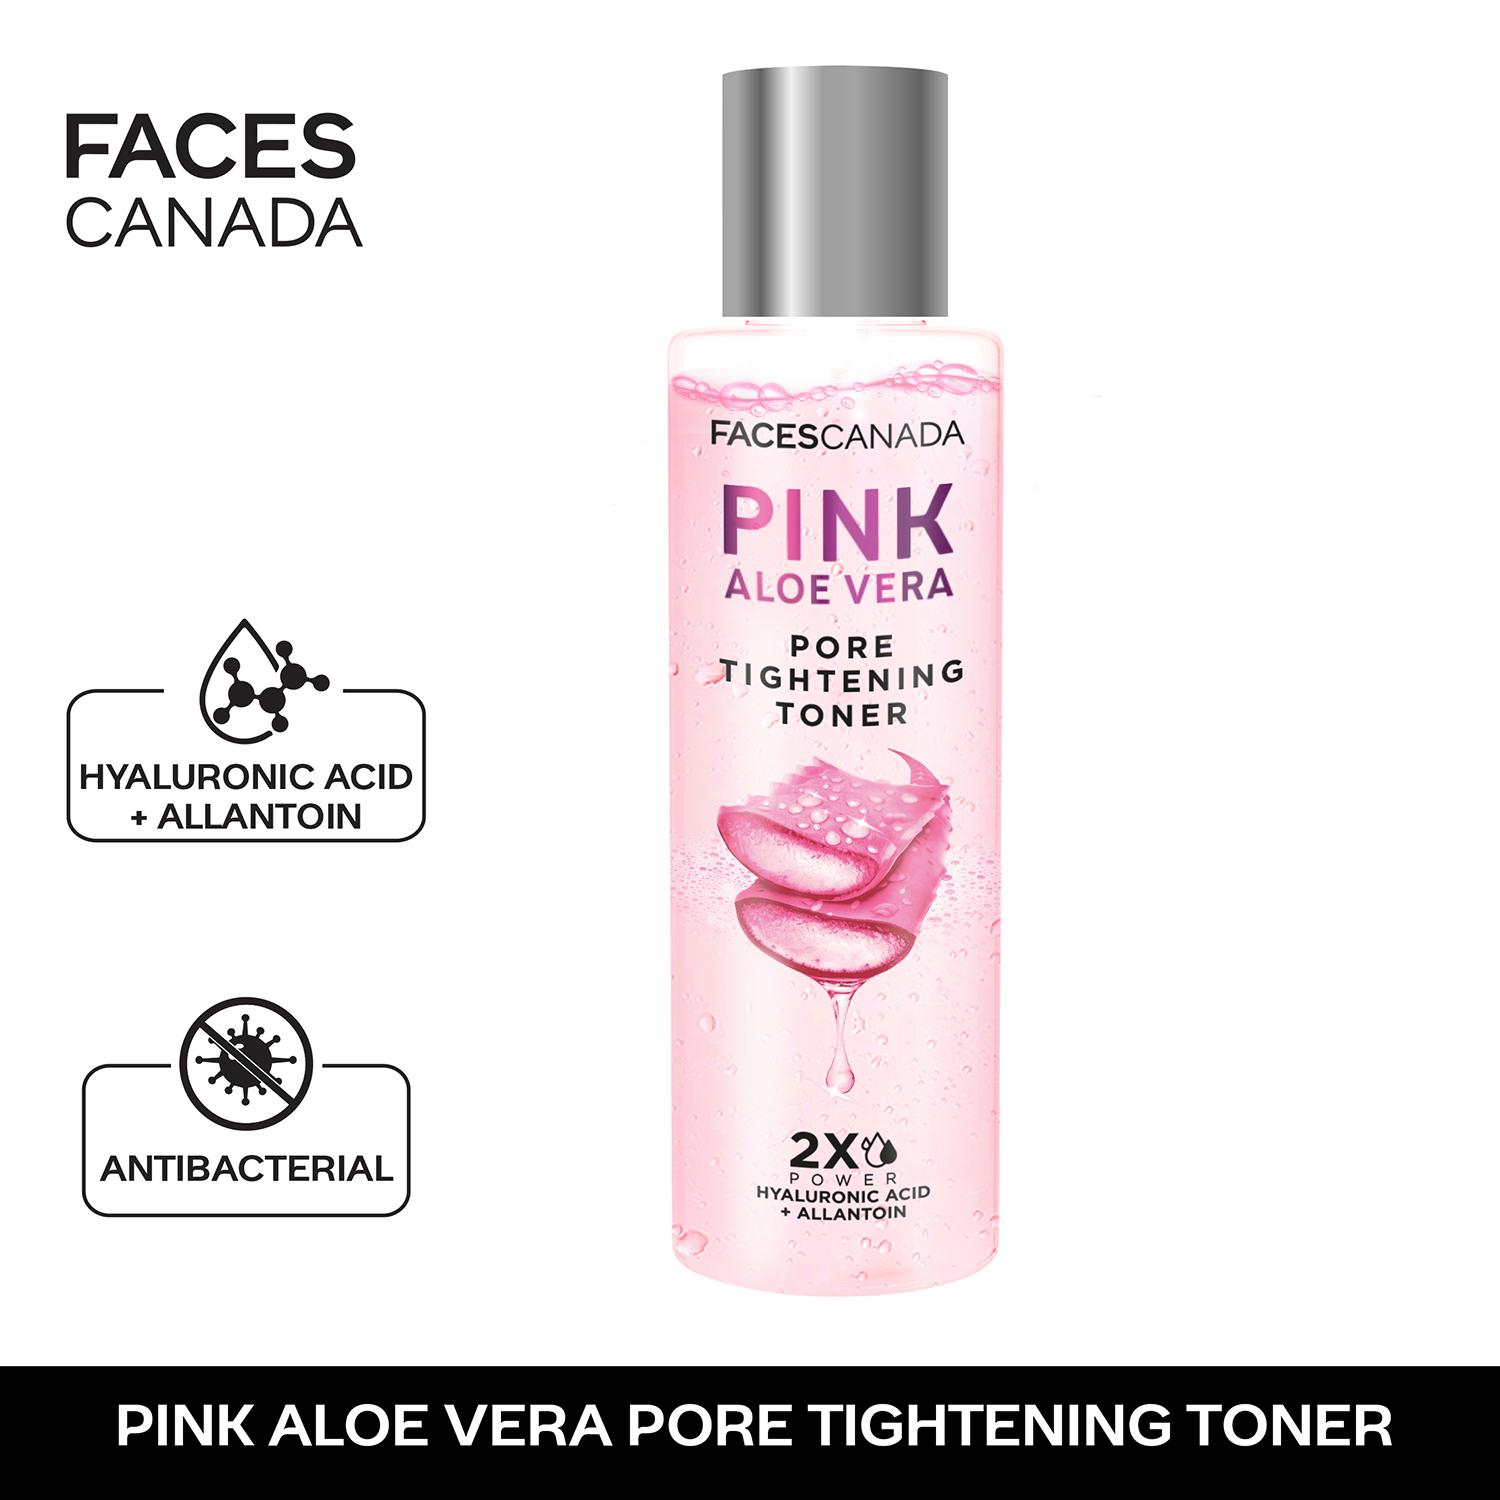 Faces Canada | Faces Canada Pink Aloe Vera Pore Tightening Toner, Allantoin & Hyaluronic Acid (100 ml)